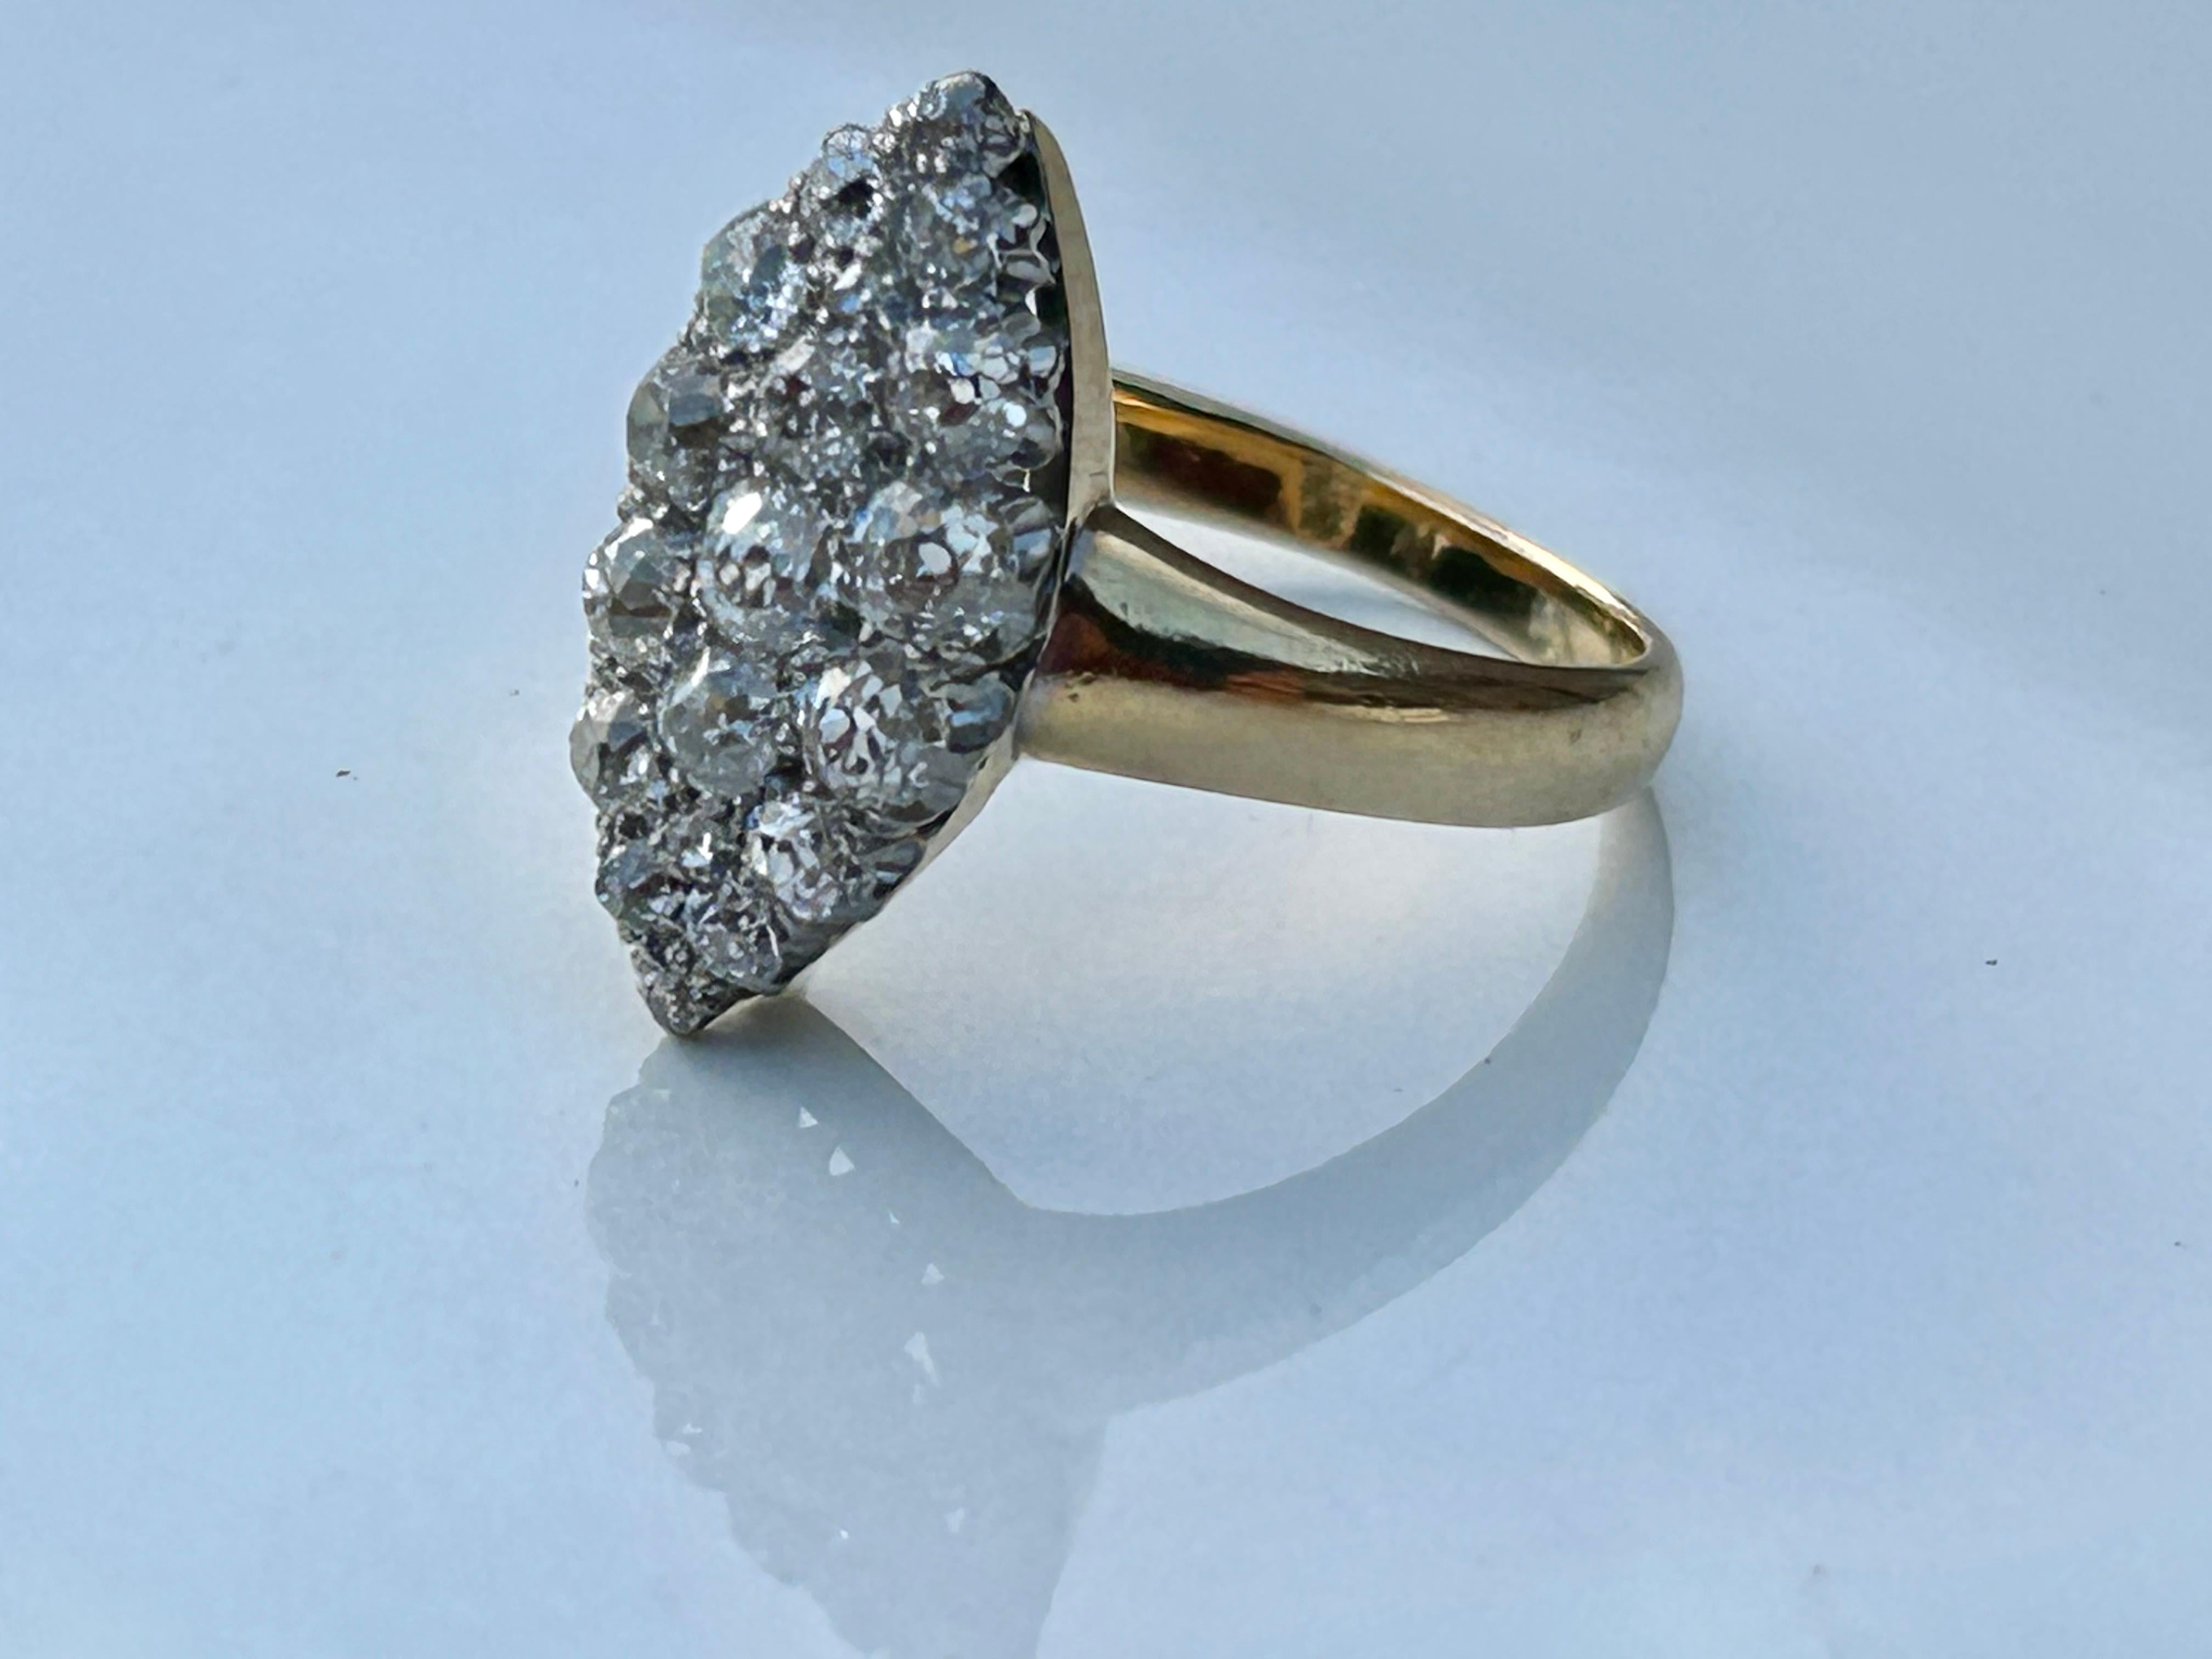 2.2 carat diamond ring